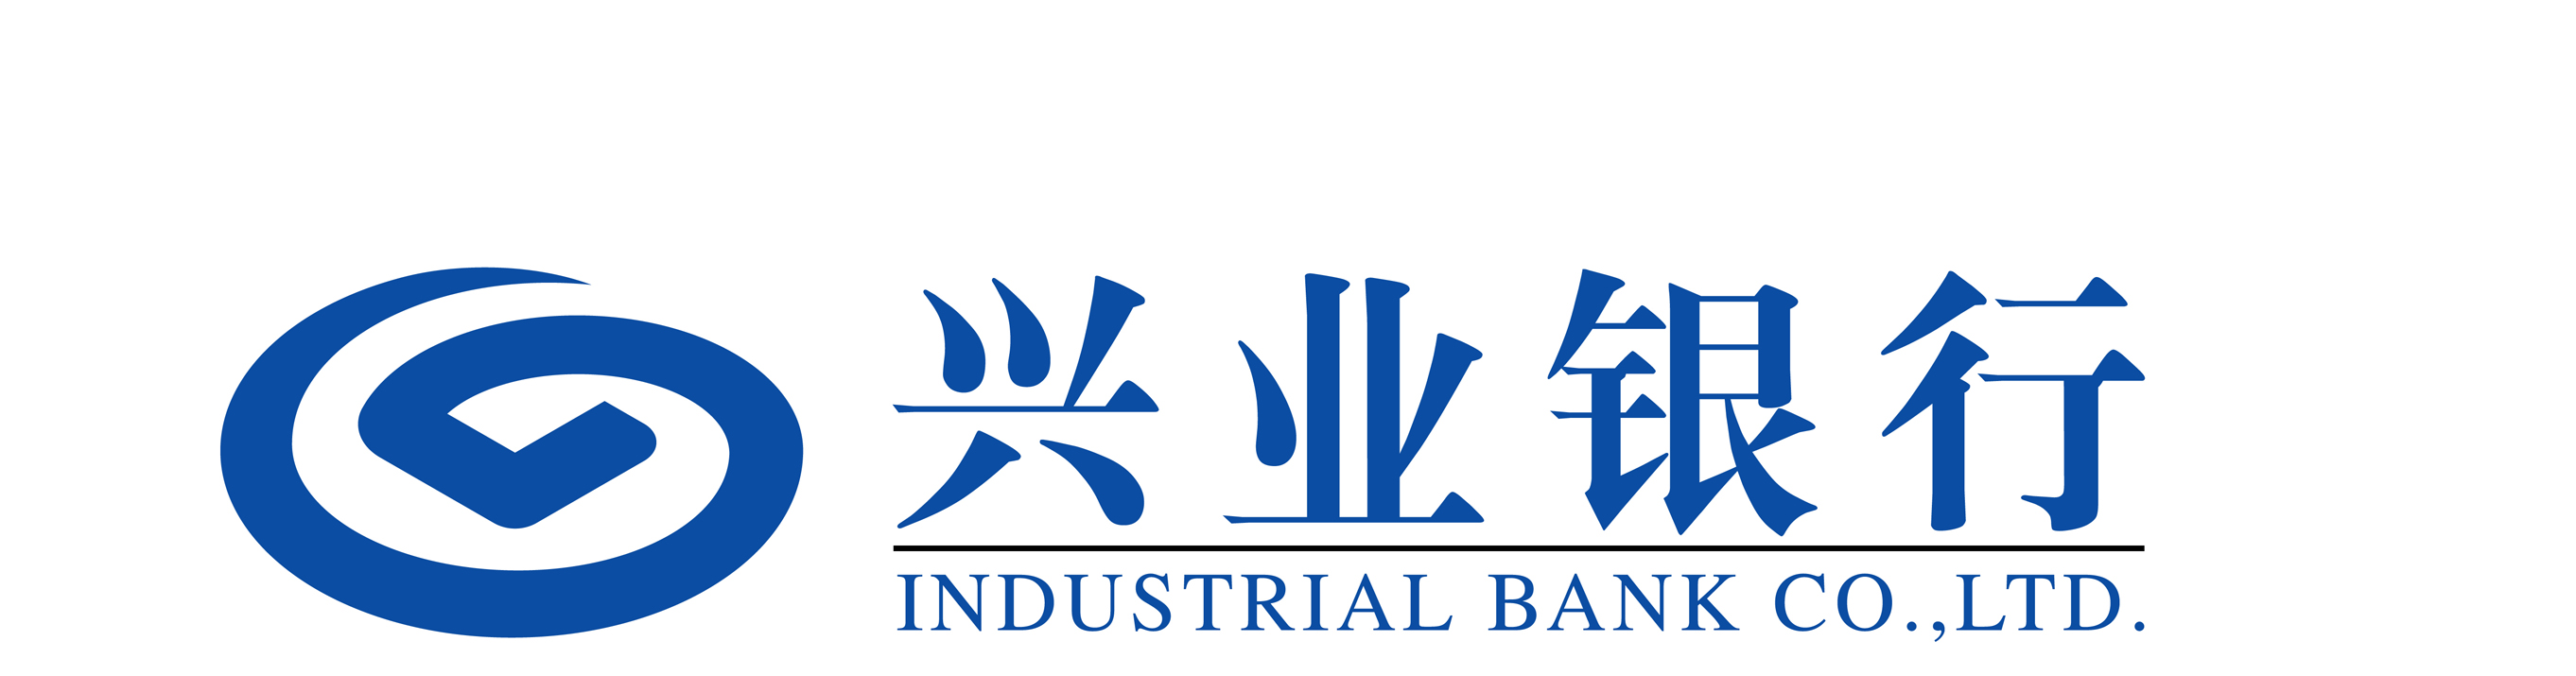 Bank import. Bank of China logo. Экспортно-импортный банк Китая (the Export-Import Bank of China). Industrial Bank of Korea. Urals Financial and Industrial Bank логотип.